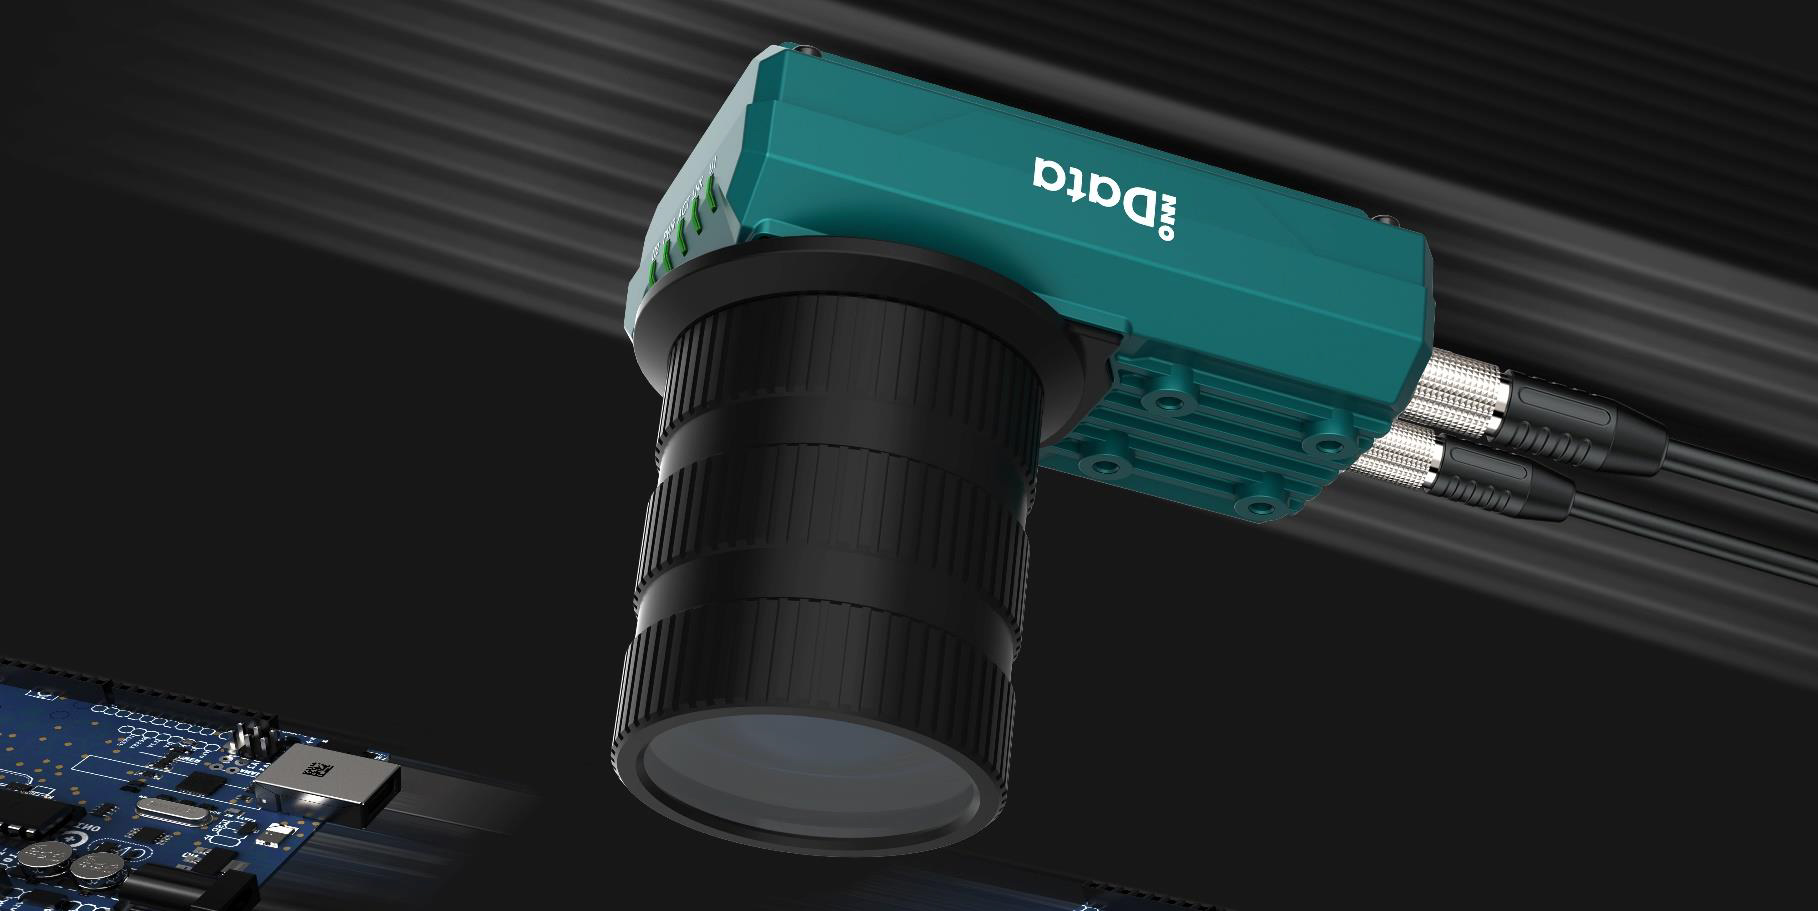 iData DM5000 High-performance Fixed Mount Scanner